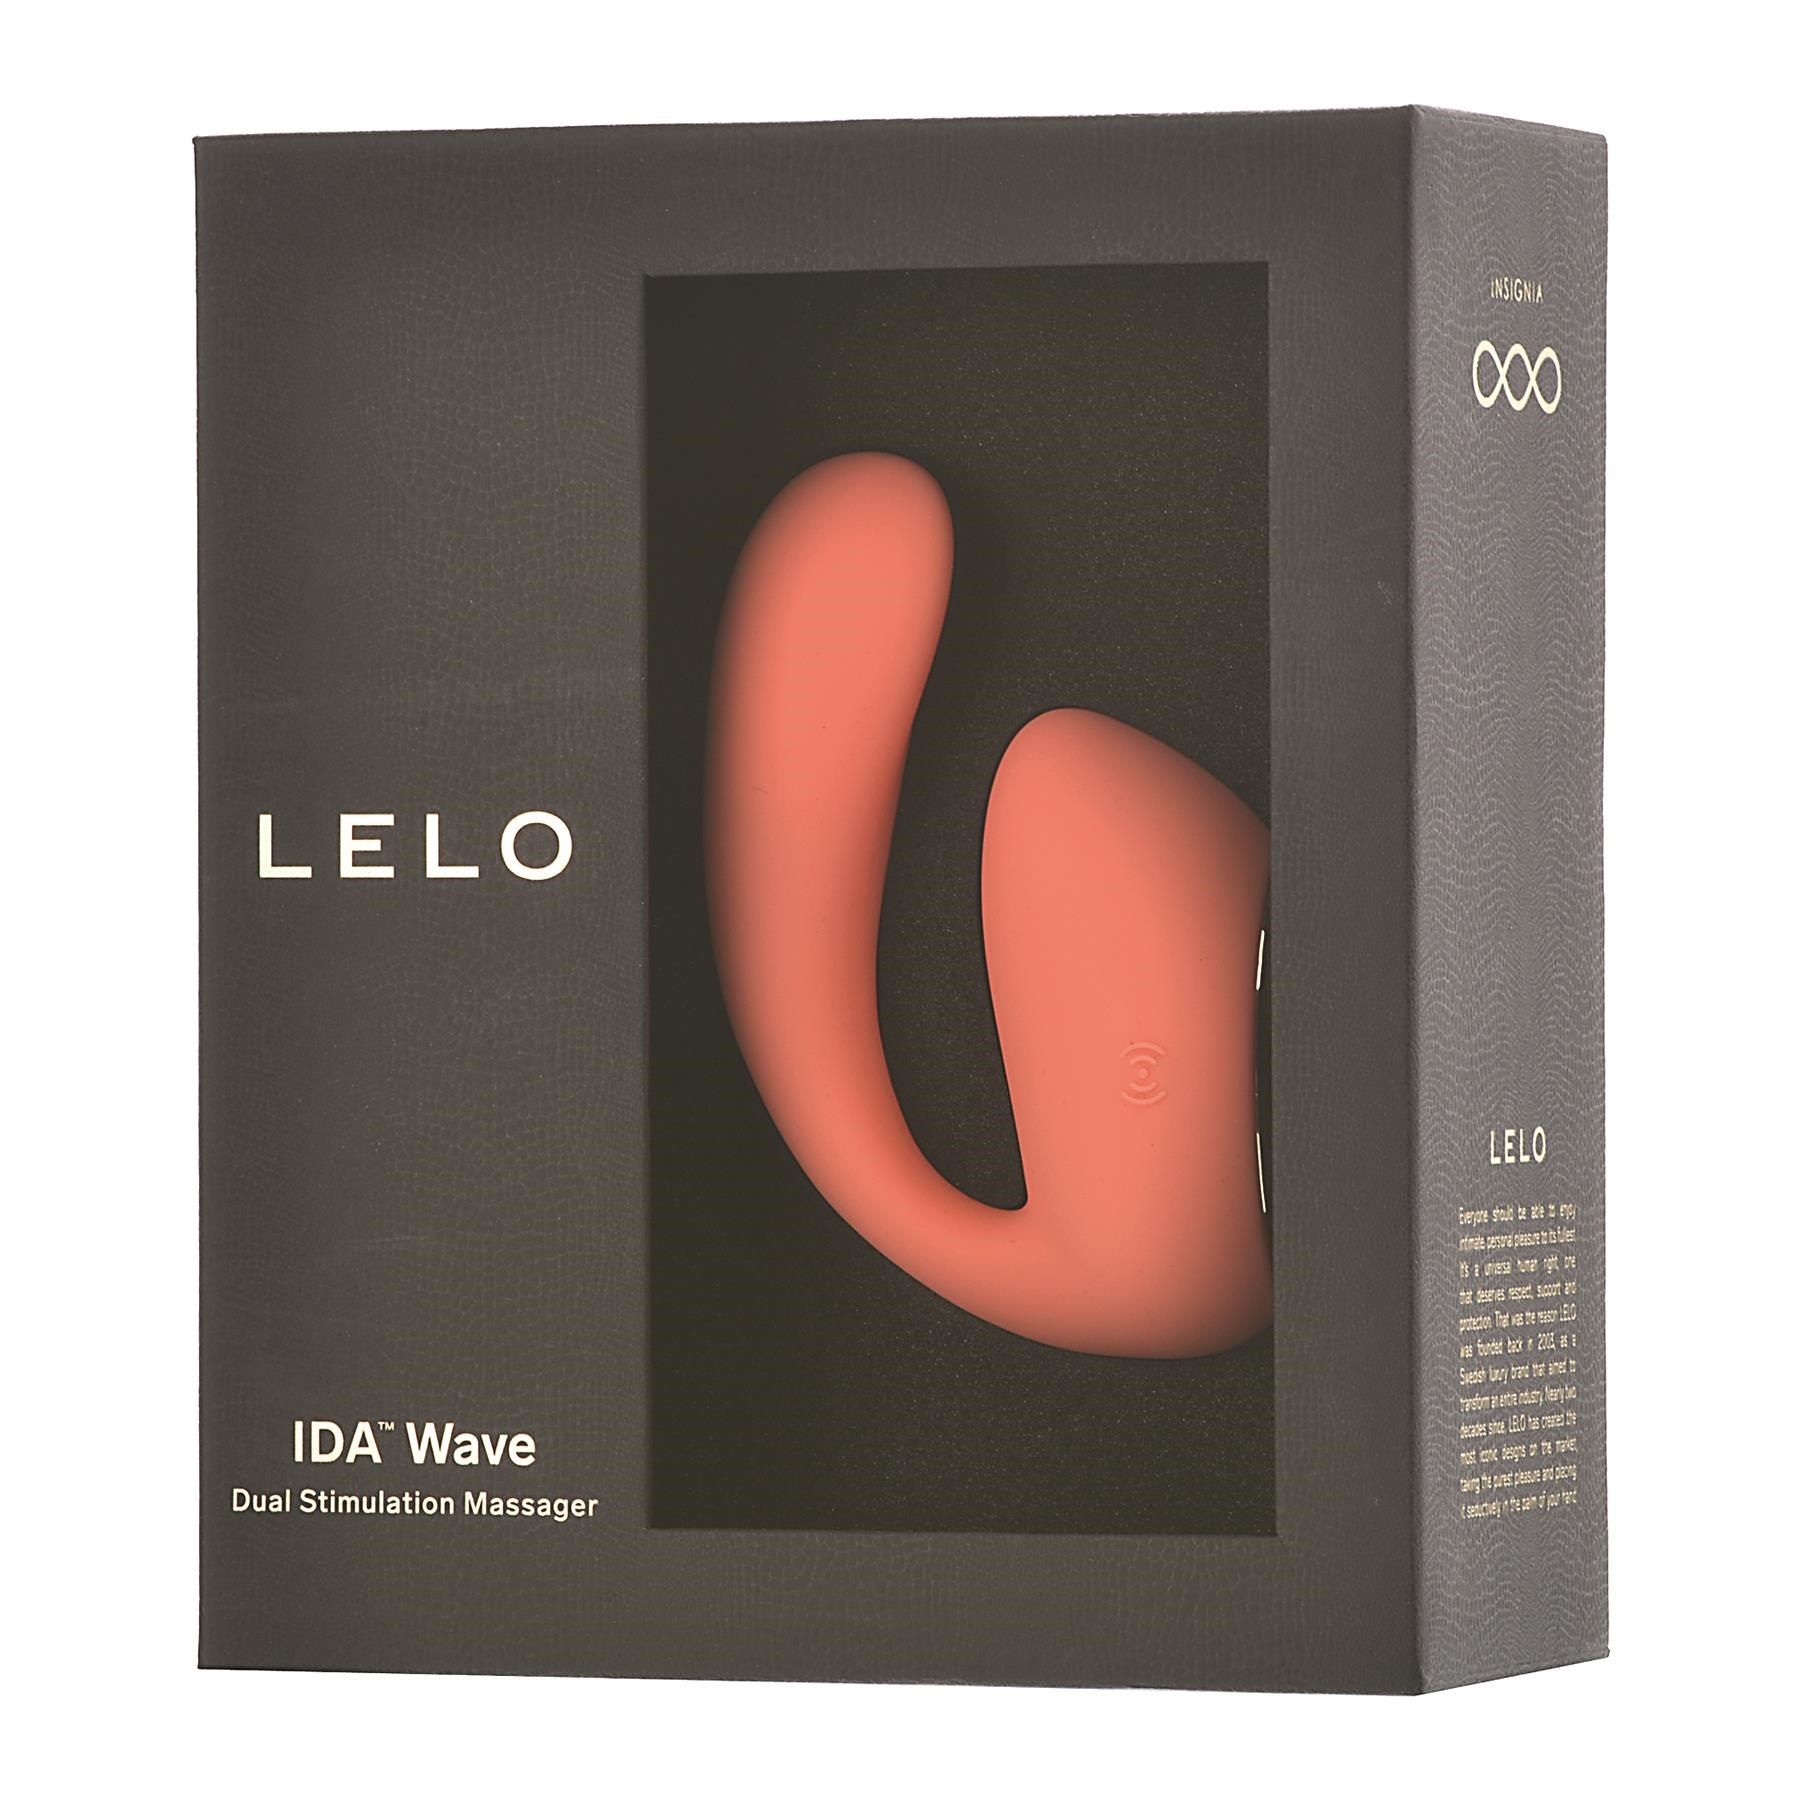 Lelo Ida Wave Dual Stimulating Massager - Packaging Shot